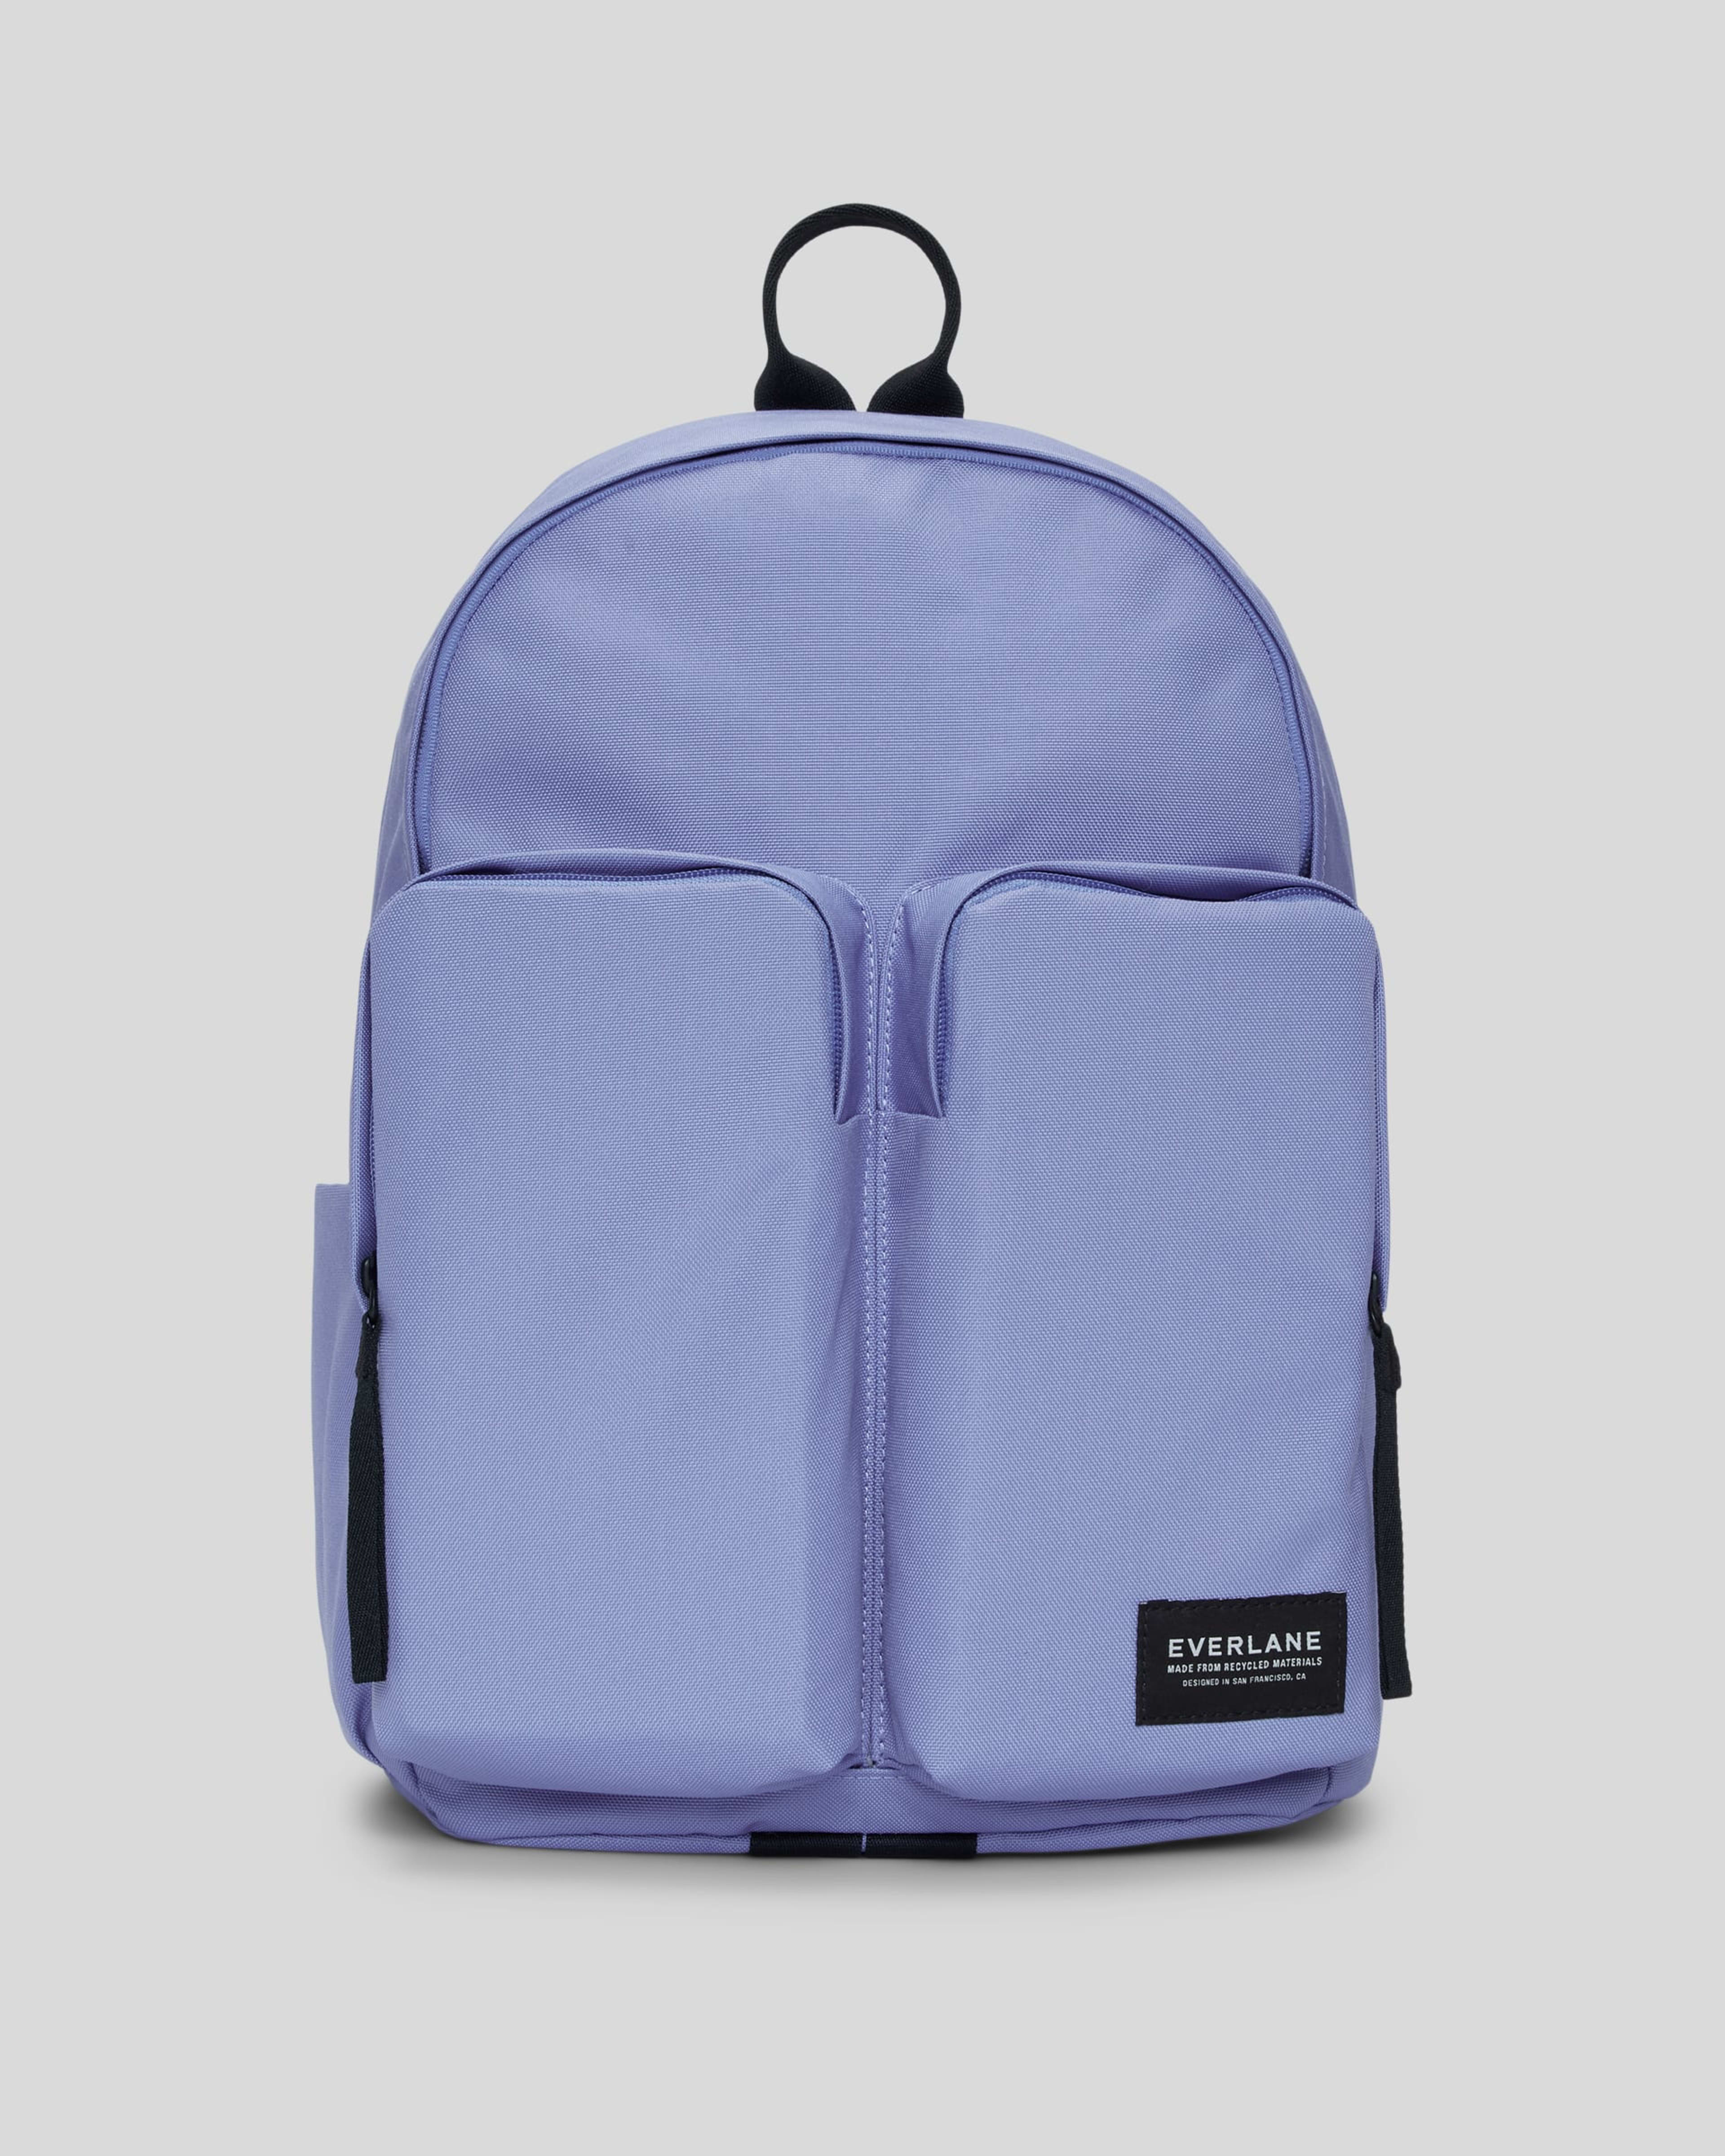 Everlane ReNew Transit Backpack  Backpacks, Everlane backpack